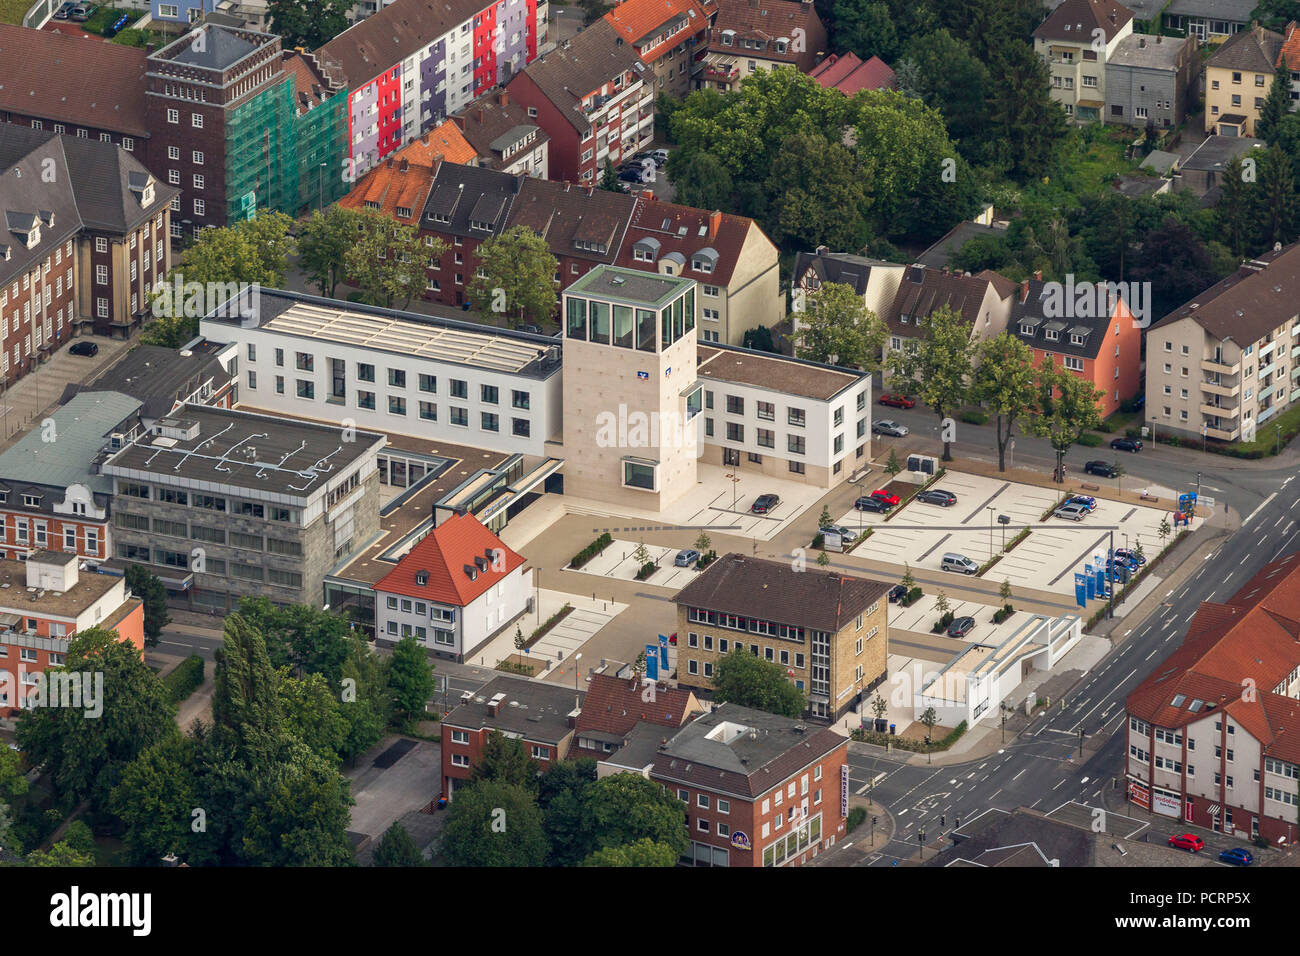 Aerial view, Volksbank Hamm Mitgliederoase, Hamm, Ruhr area, North Rhine-Westphalia, Germany, Europe Stock Photo